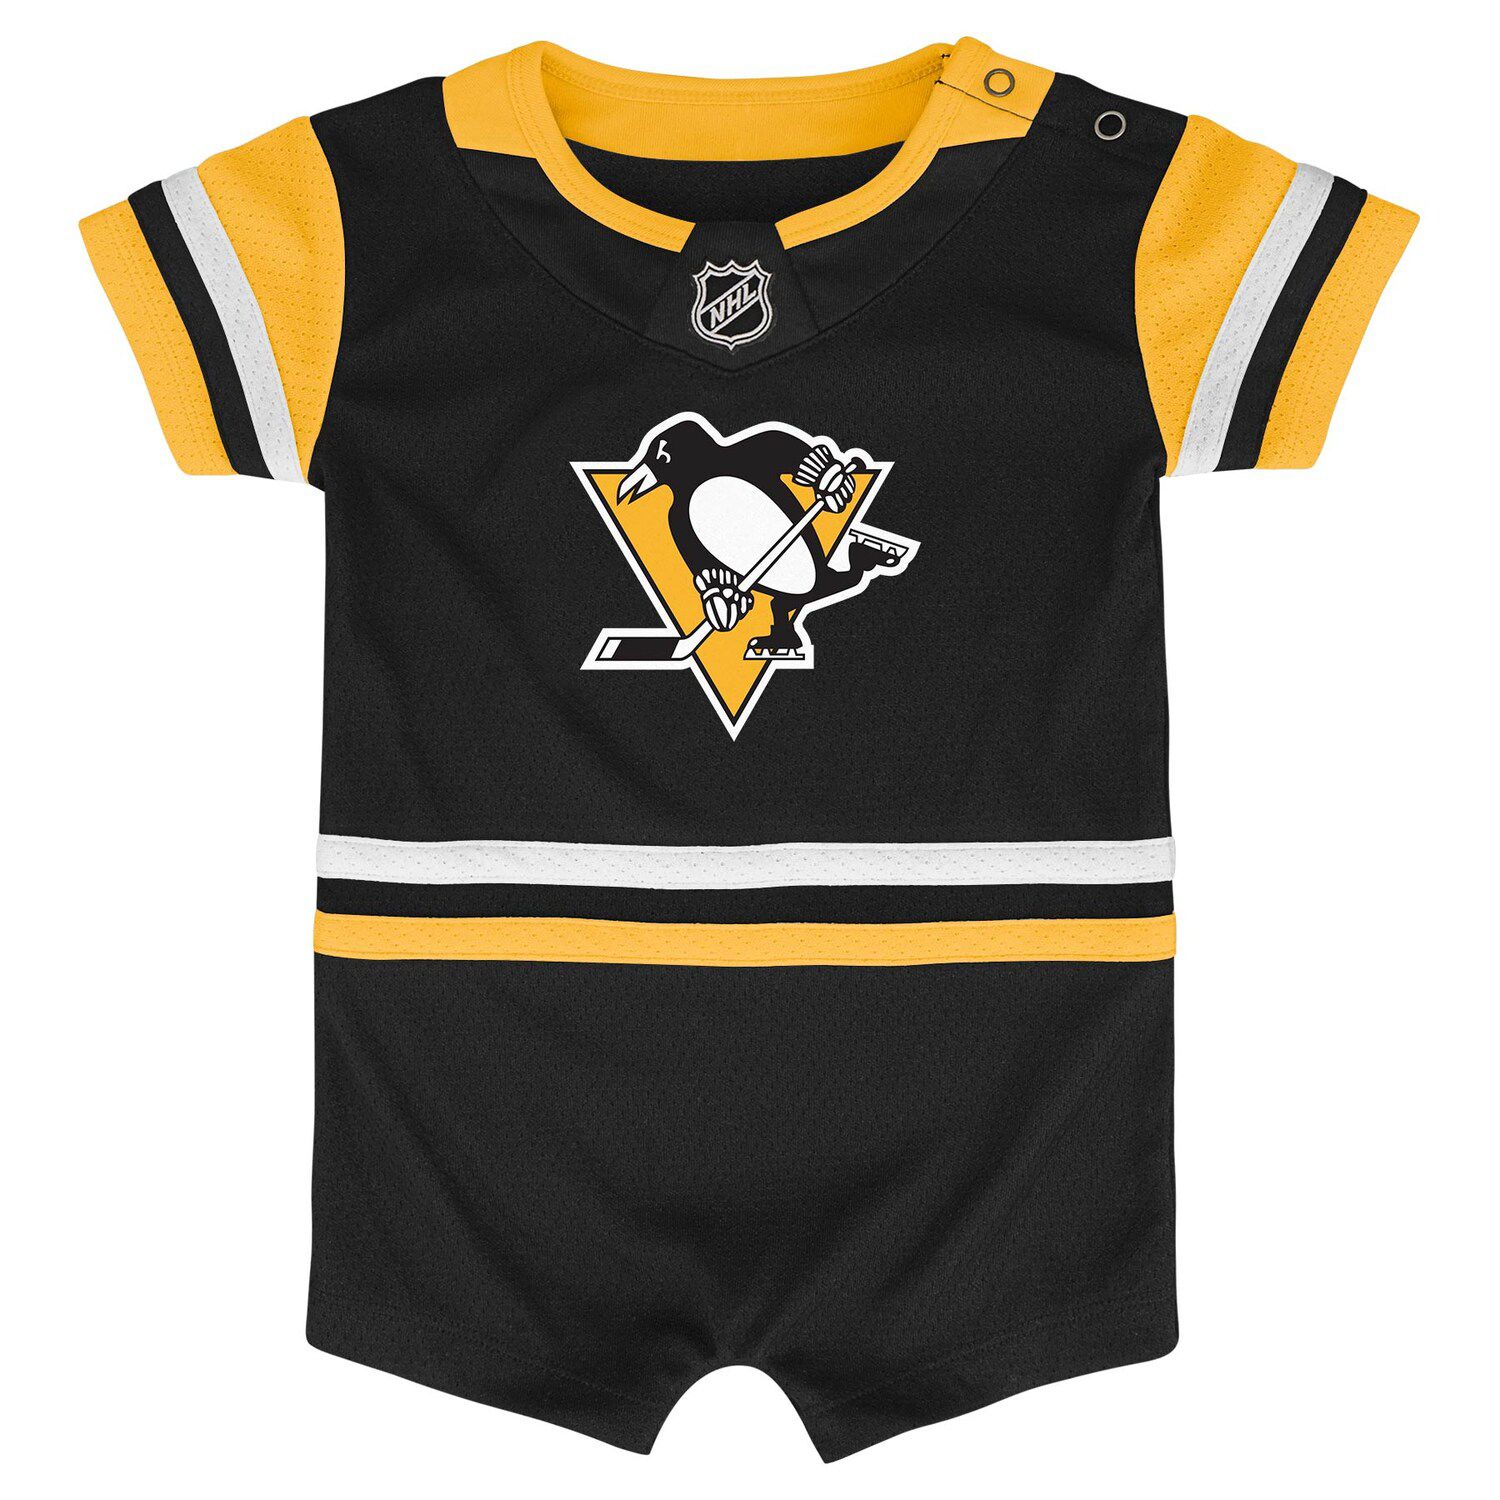 penguins replica jersey